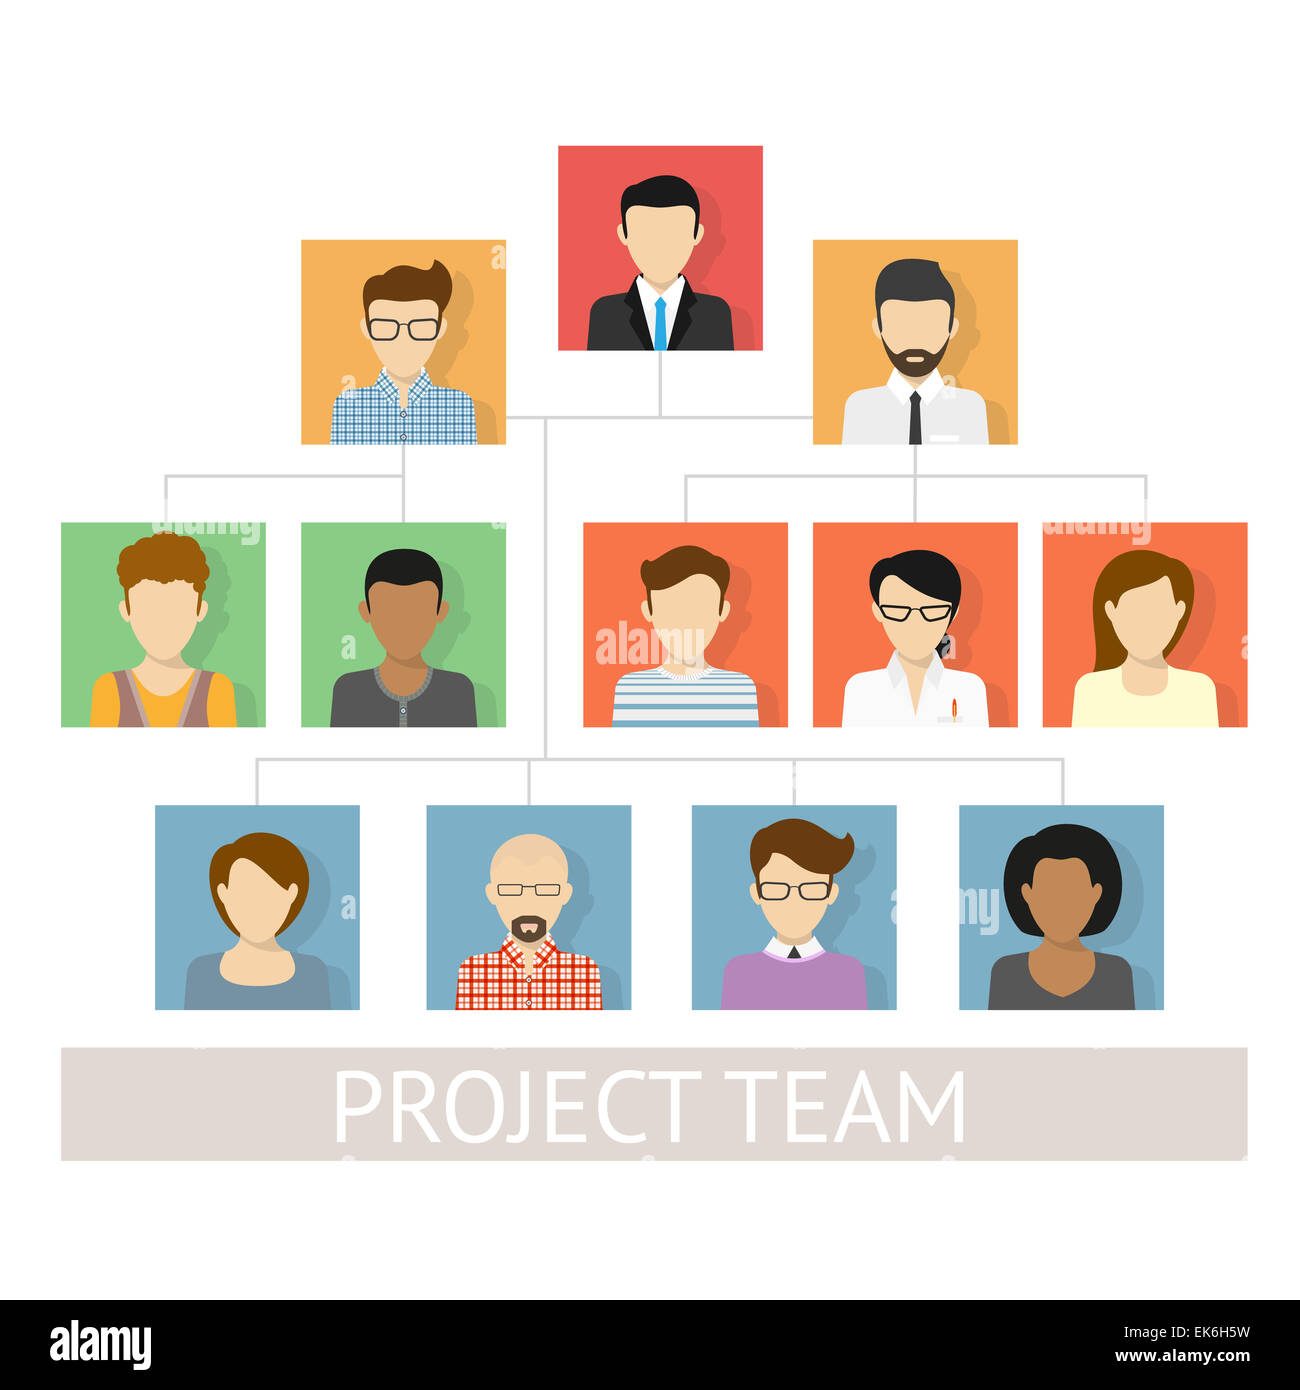 Project team organization Stock Photo